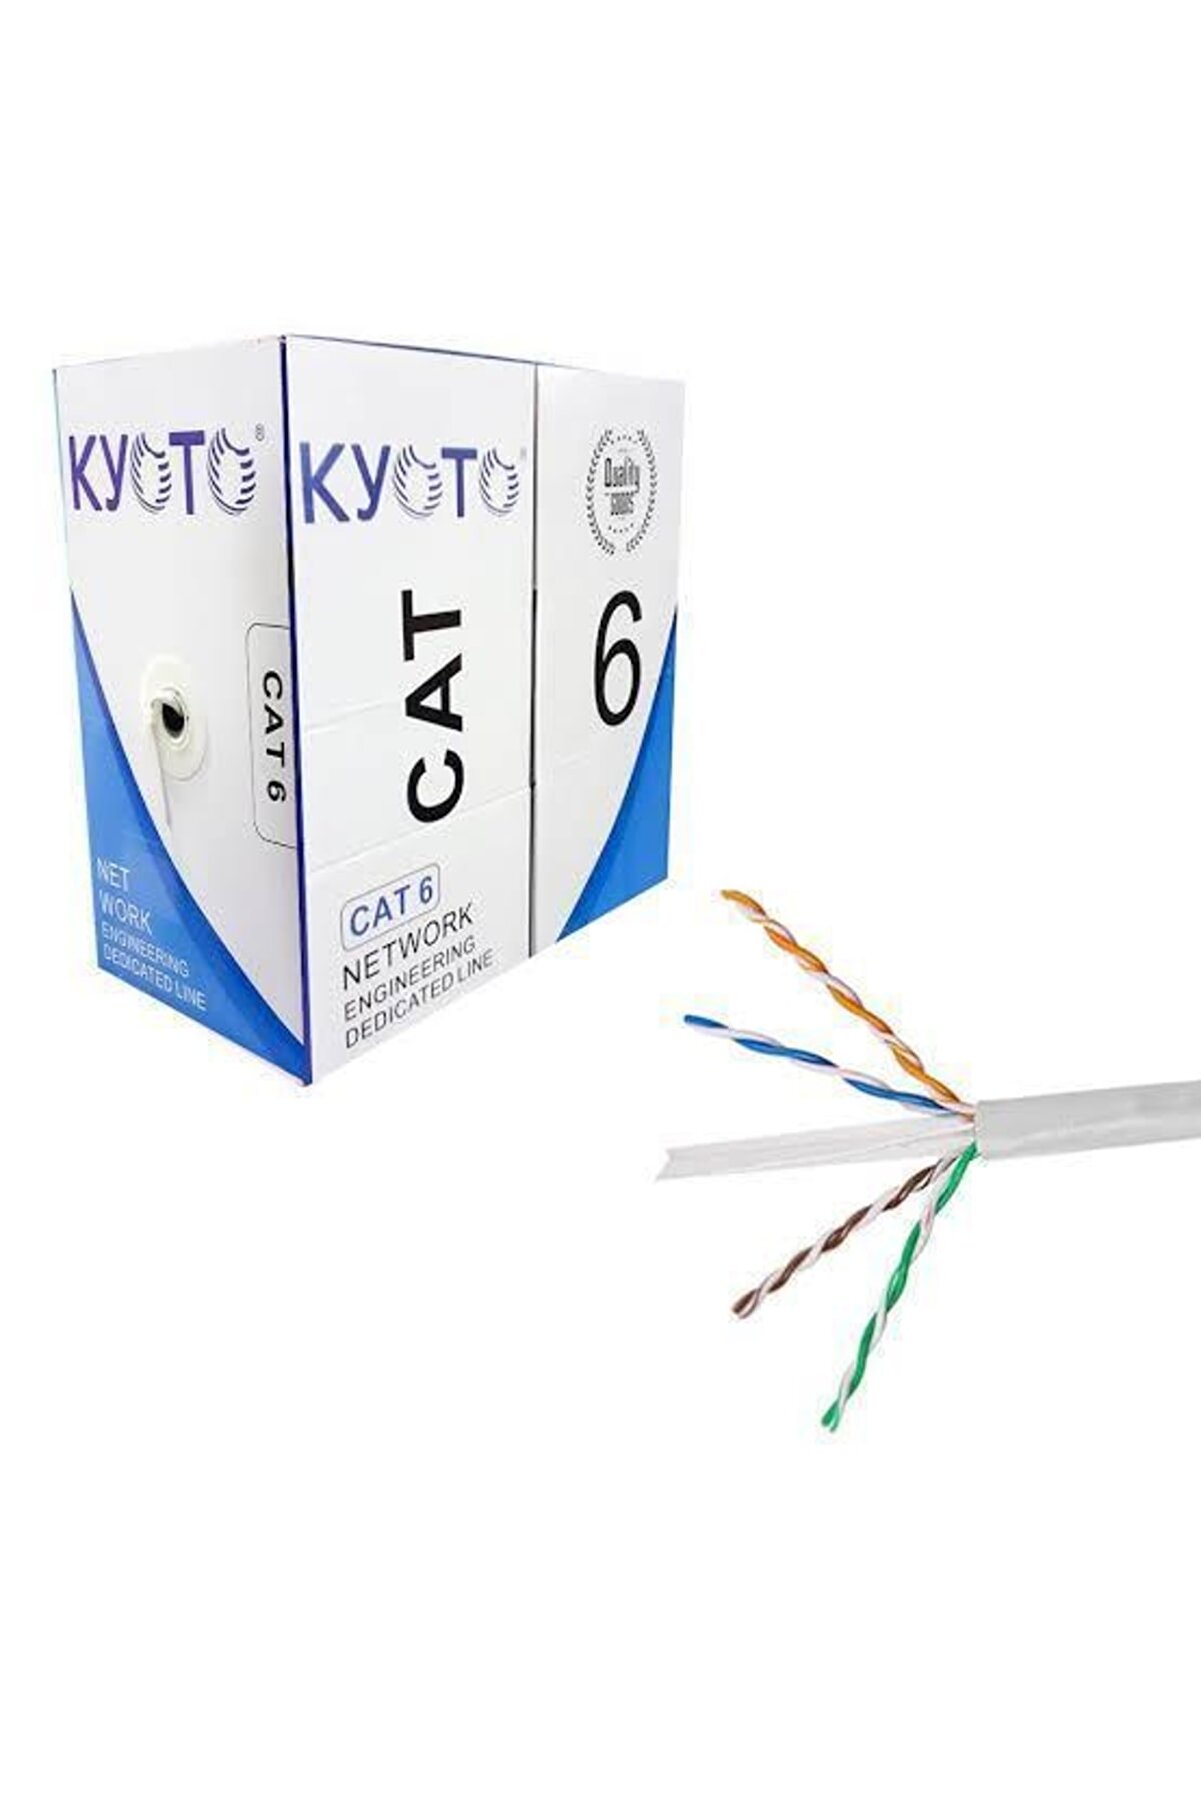 Kyoto Cat6 Kablo 23 Awg Cat 6 Ethernet Internet Kablosu 305 Metre